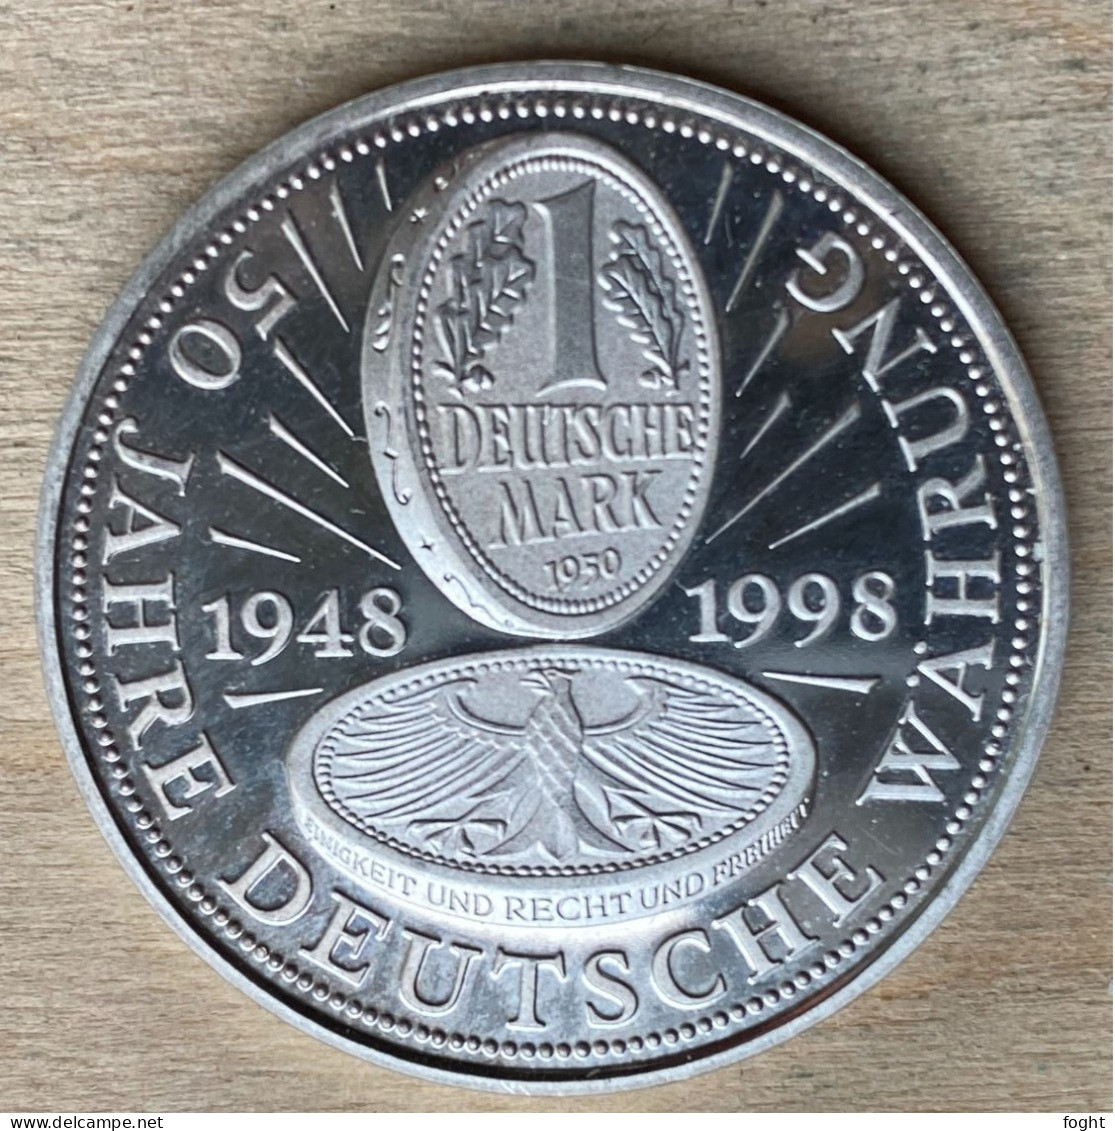 1998 Germany /BRD Medaille  50 Jahre Deutsche Währung .500 Silber,PP,7225 - Profesionales/De Sociedad